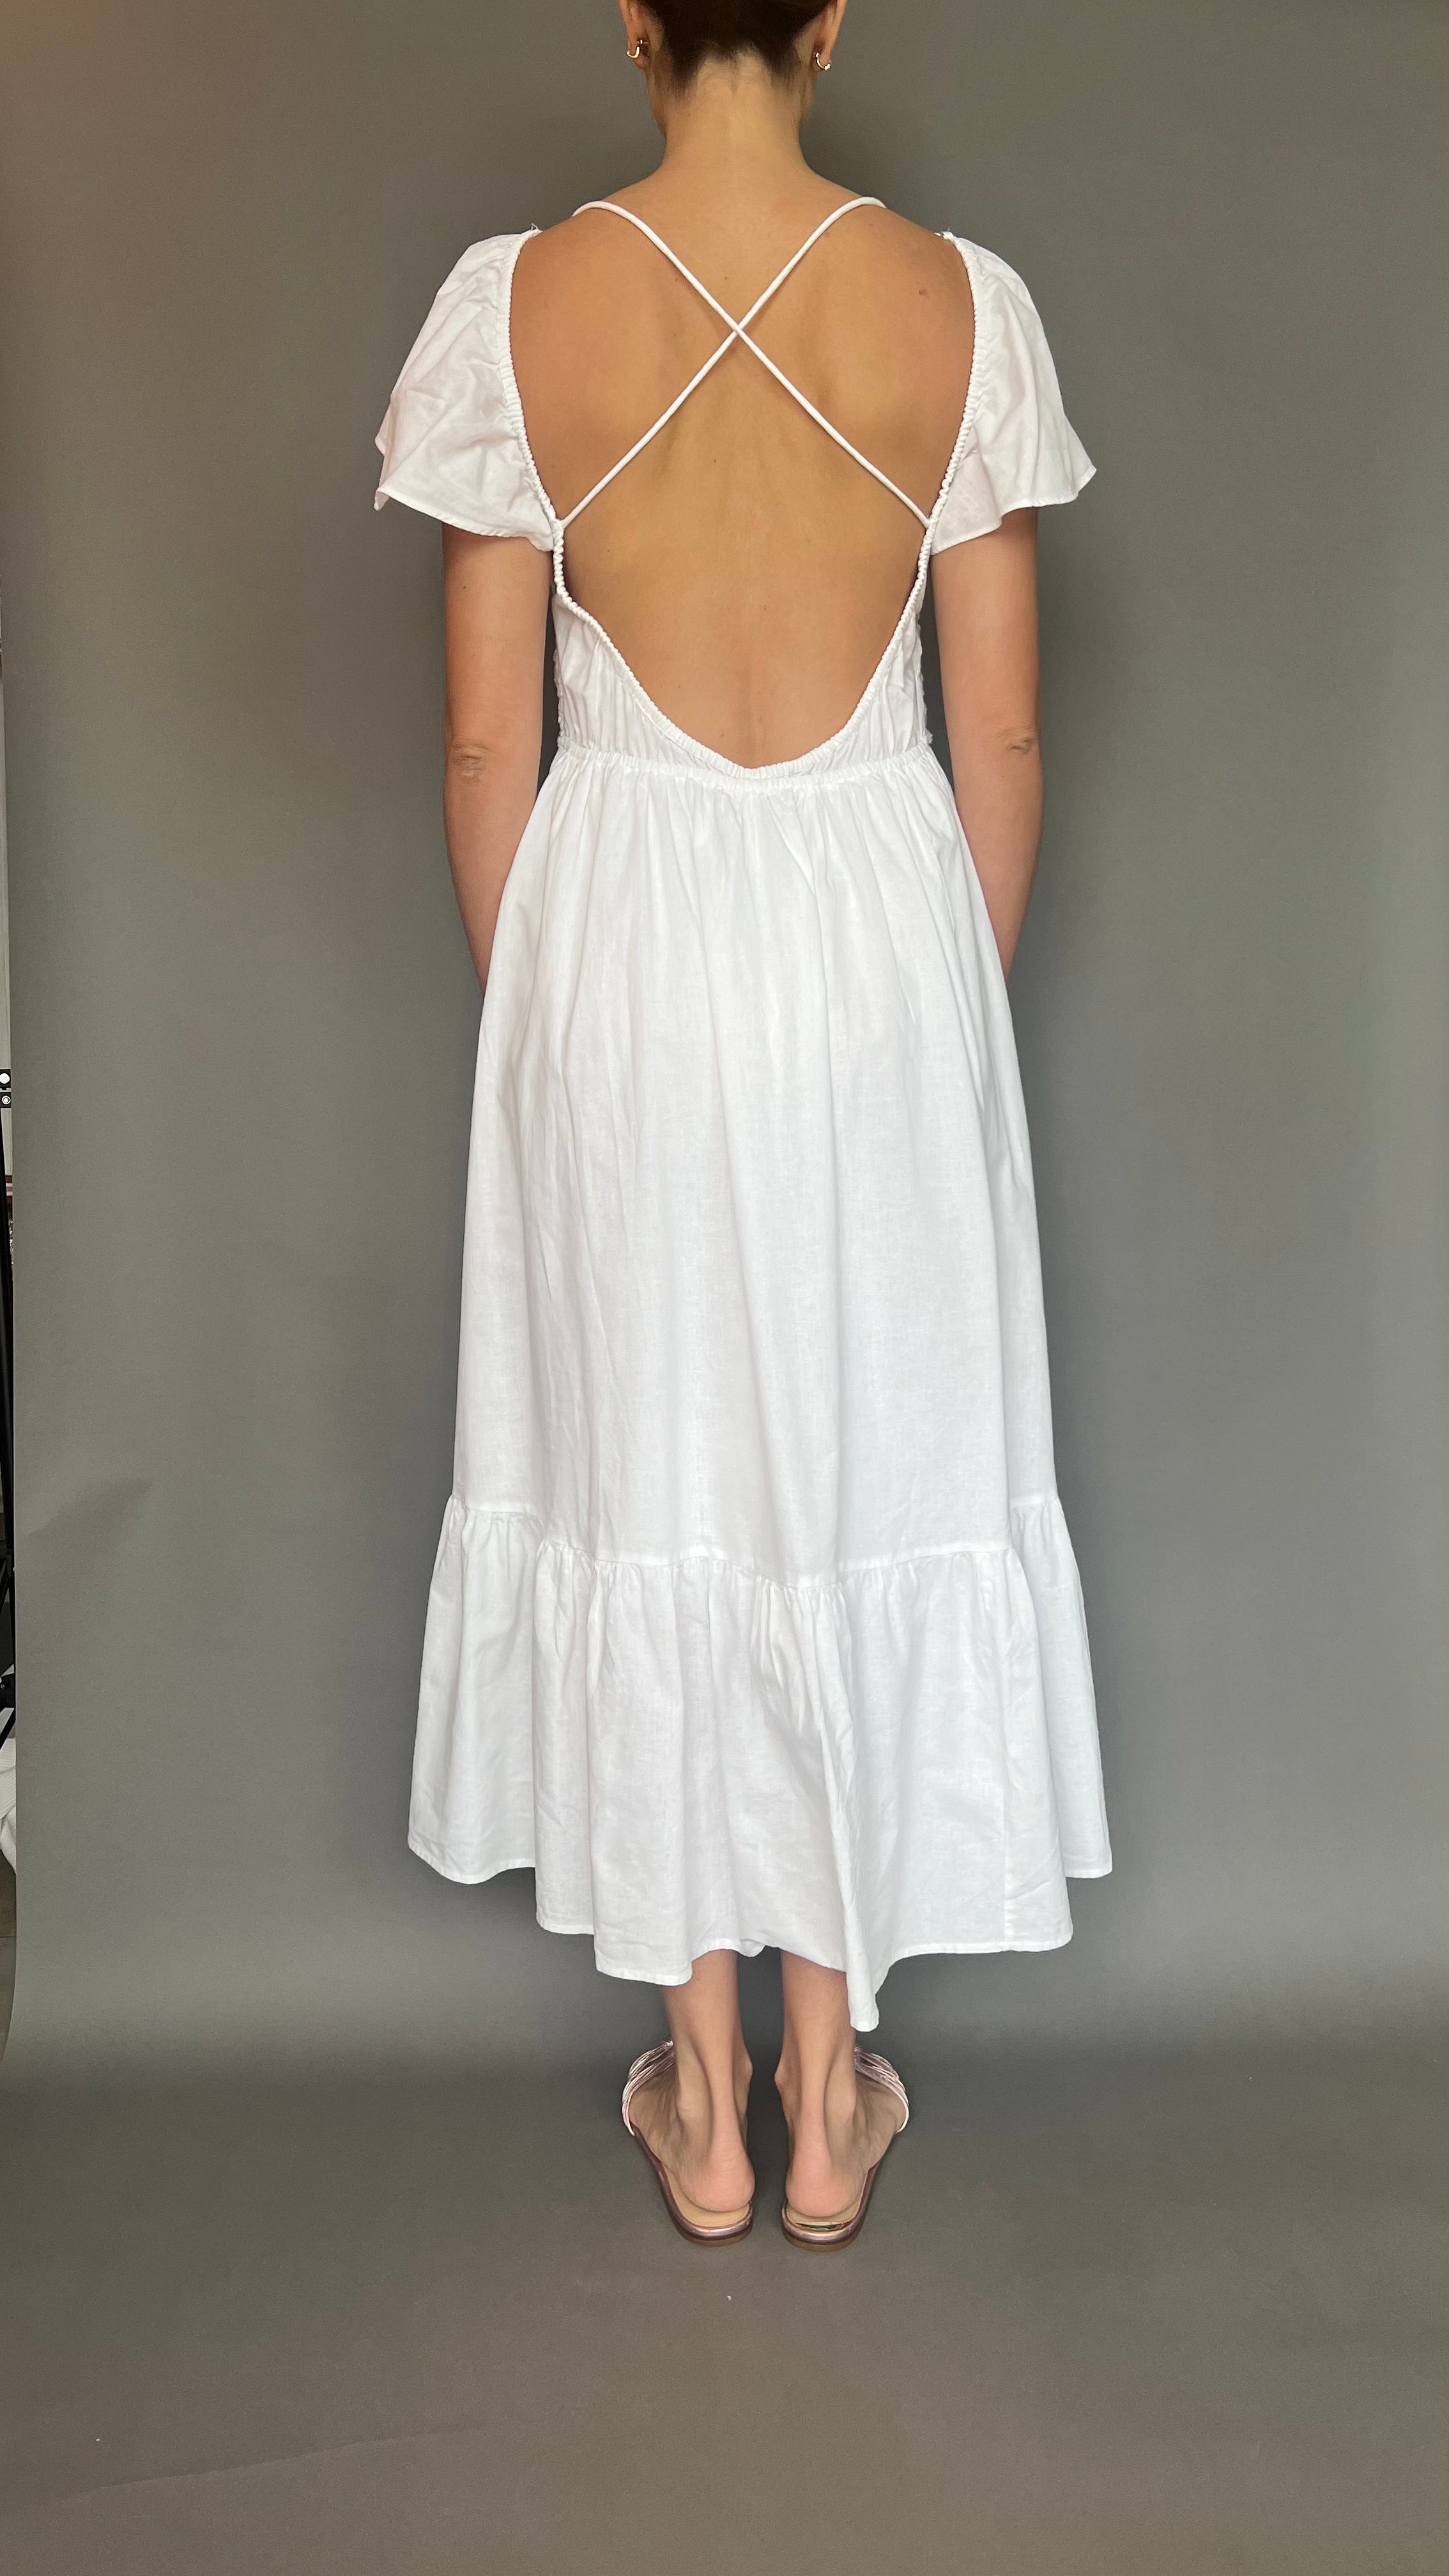 Vestido Zara Lace Blanco